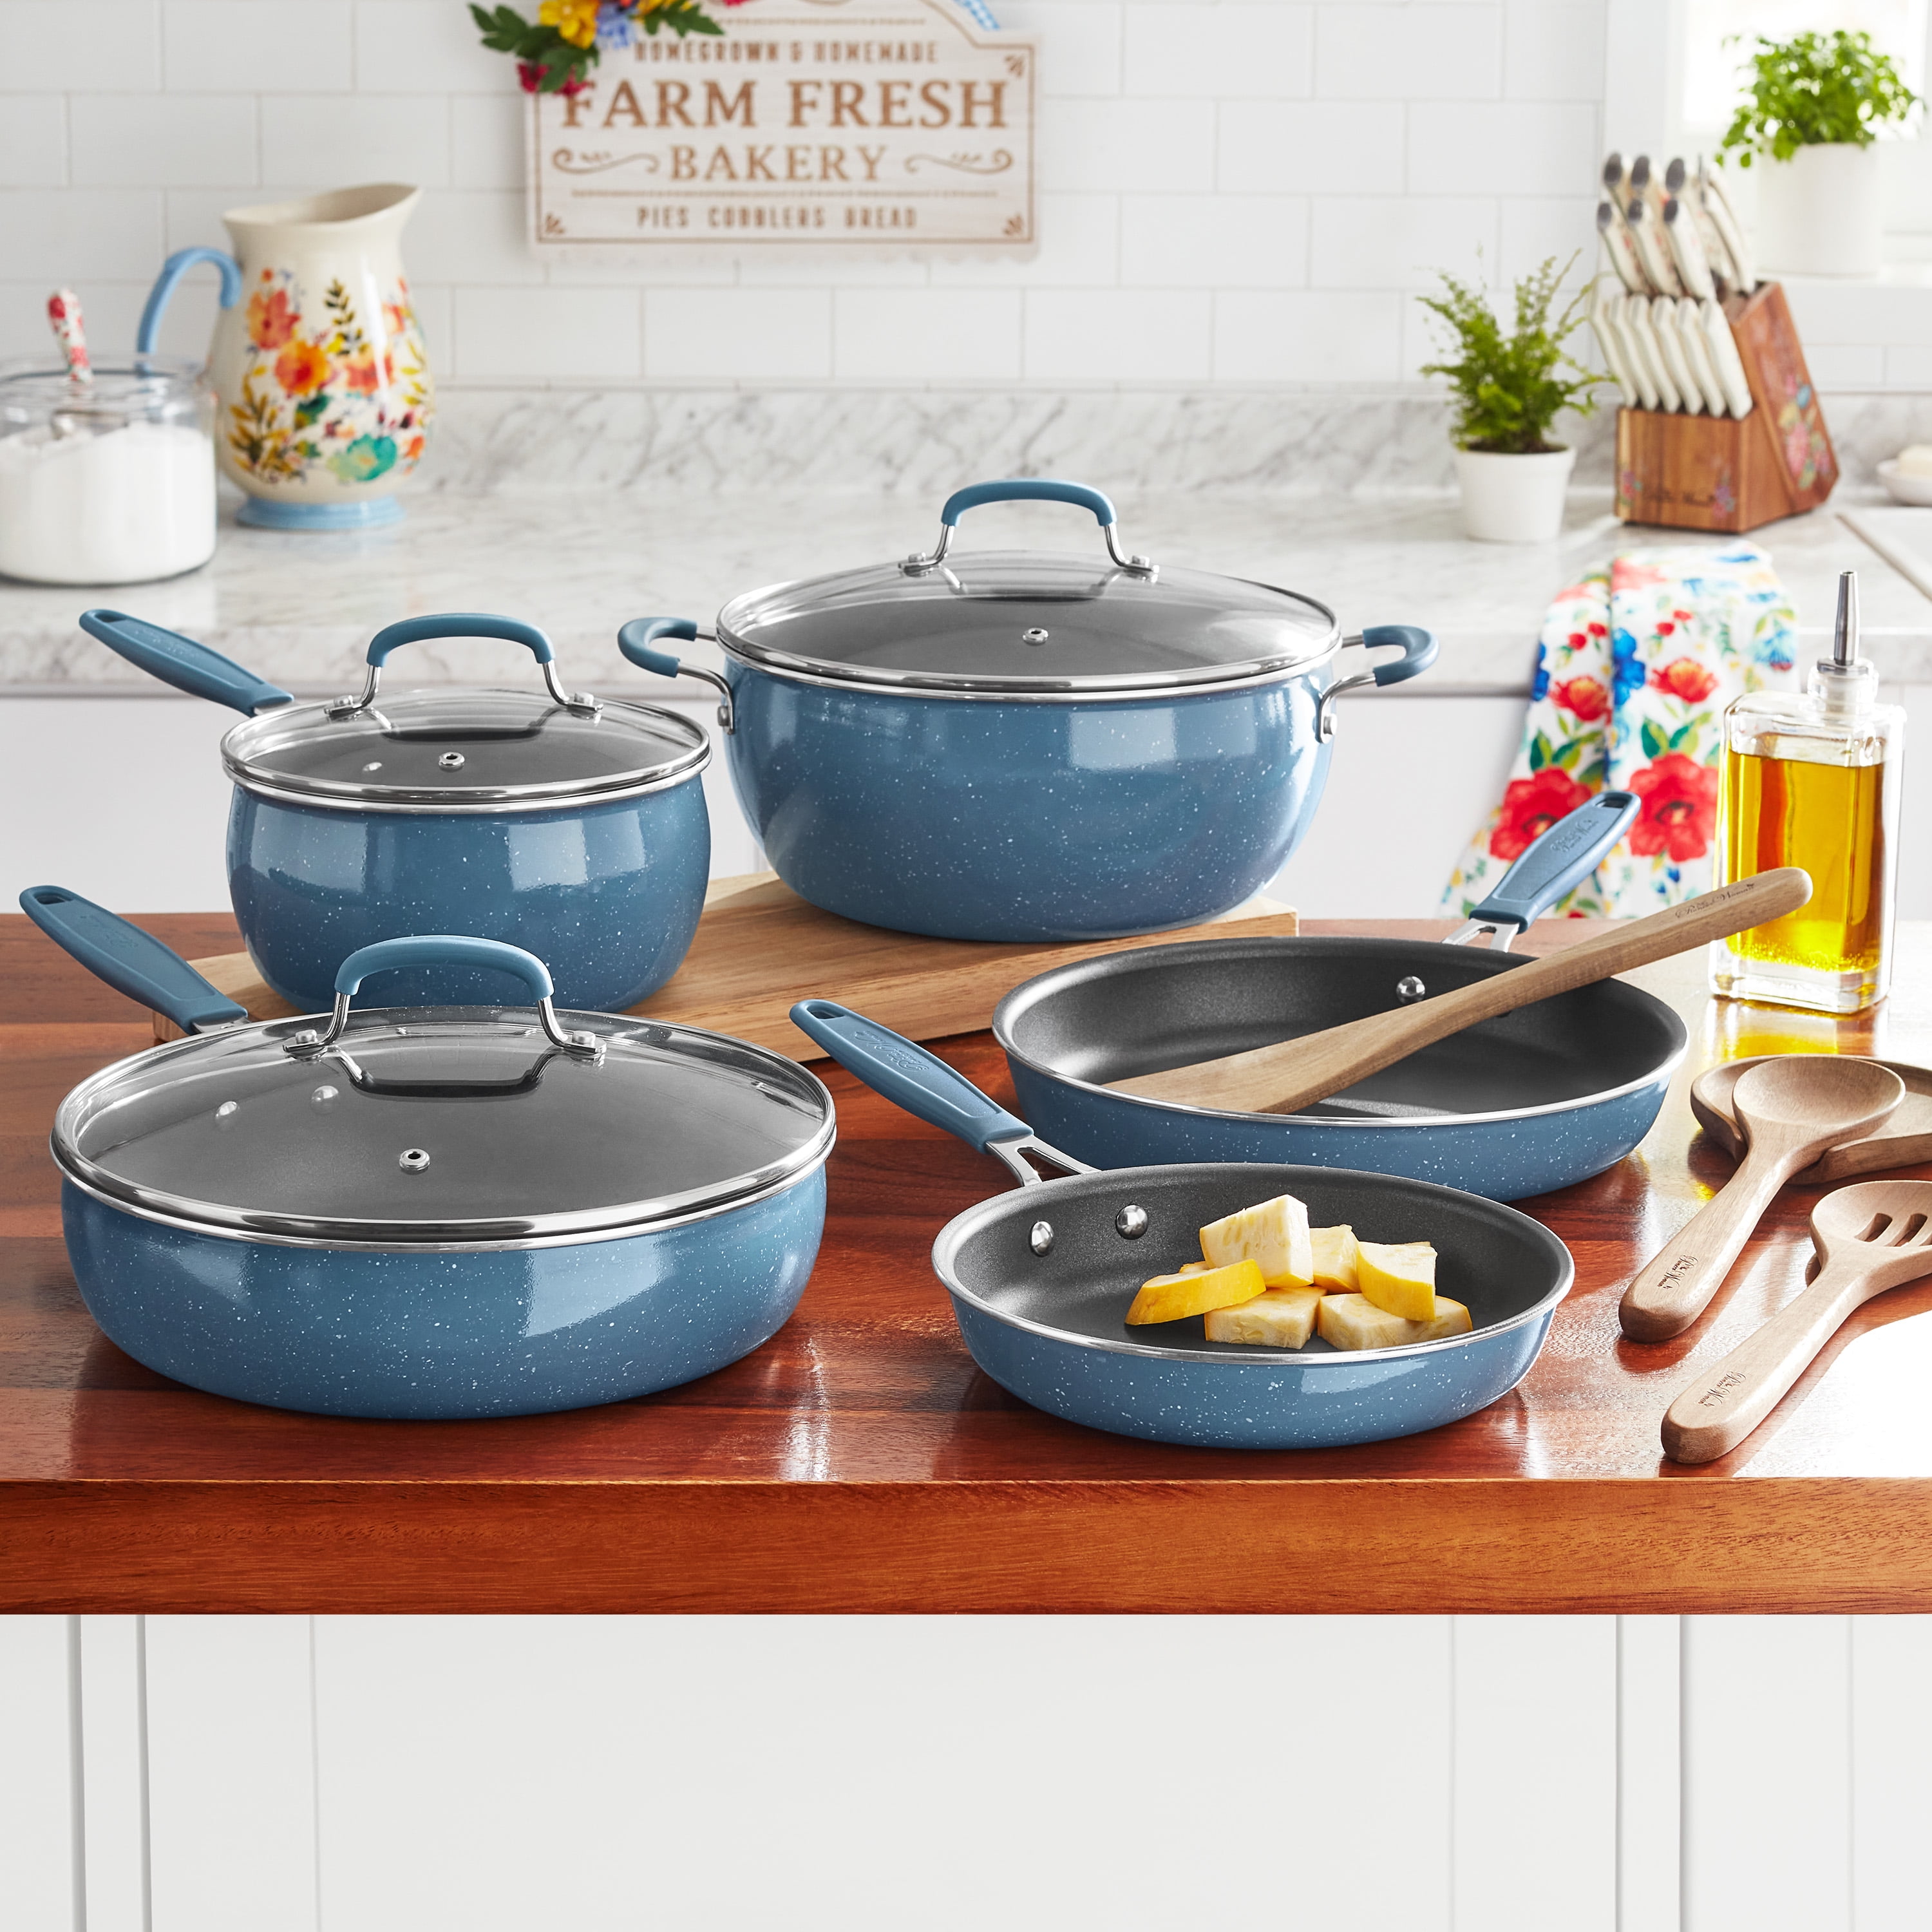 AHEIM Pots and Pans Set, Aluminum Nonstick Cookware Set, Fry Pans,  Casserole with Lid, Sauce Pan, and Utensils, 11 Piece Cooking Set (Black)